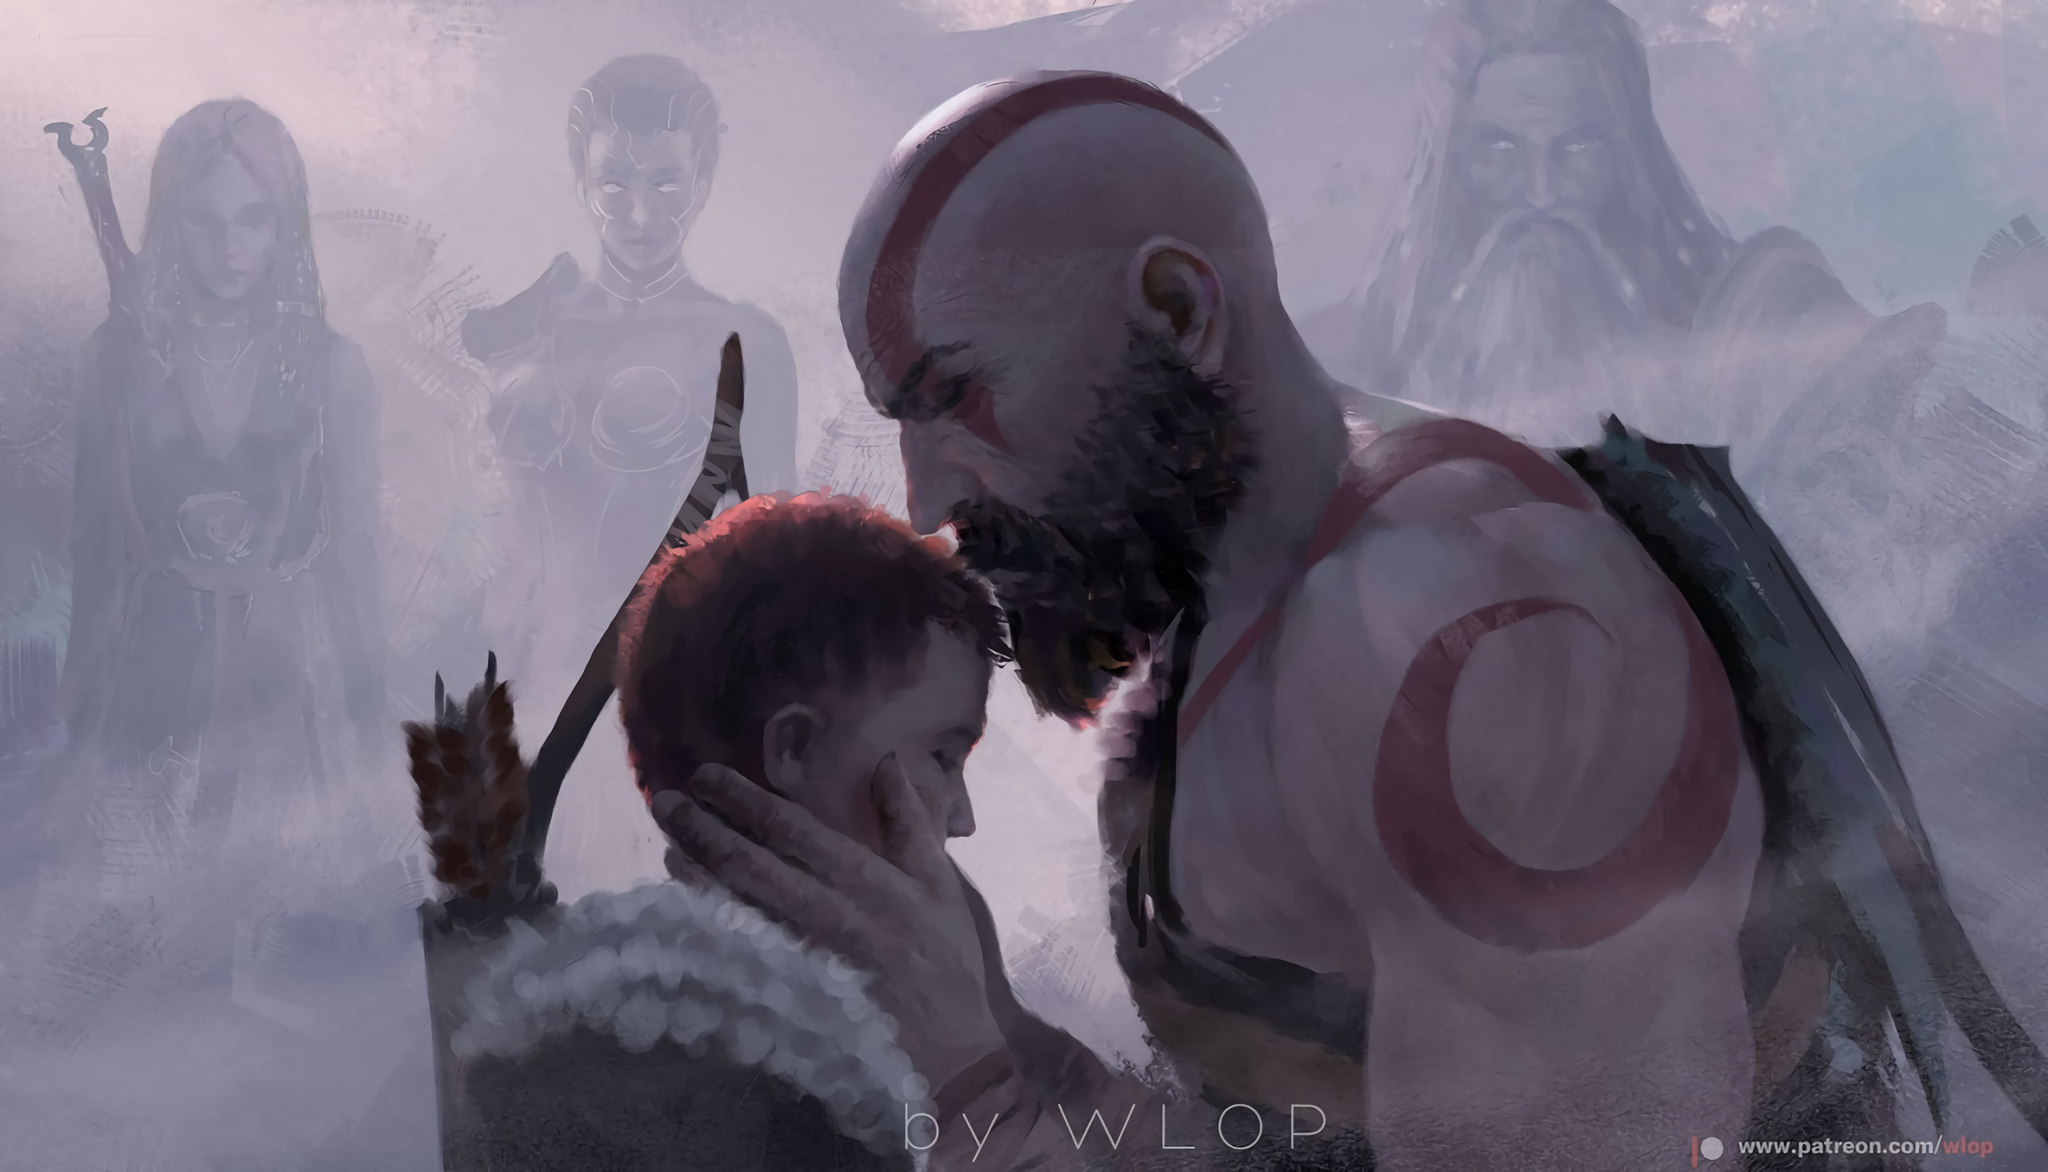 General 2048x1172 digital art artwork video games Kratos men beard WLOP tattoo God of War God of War (2018) Atreus Athena Freya Zeus